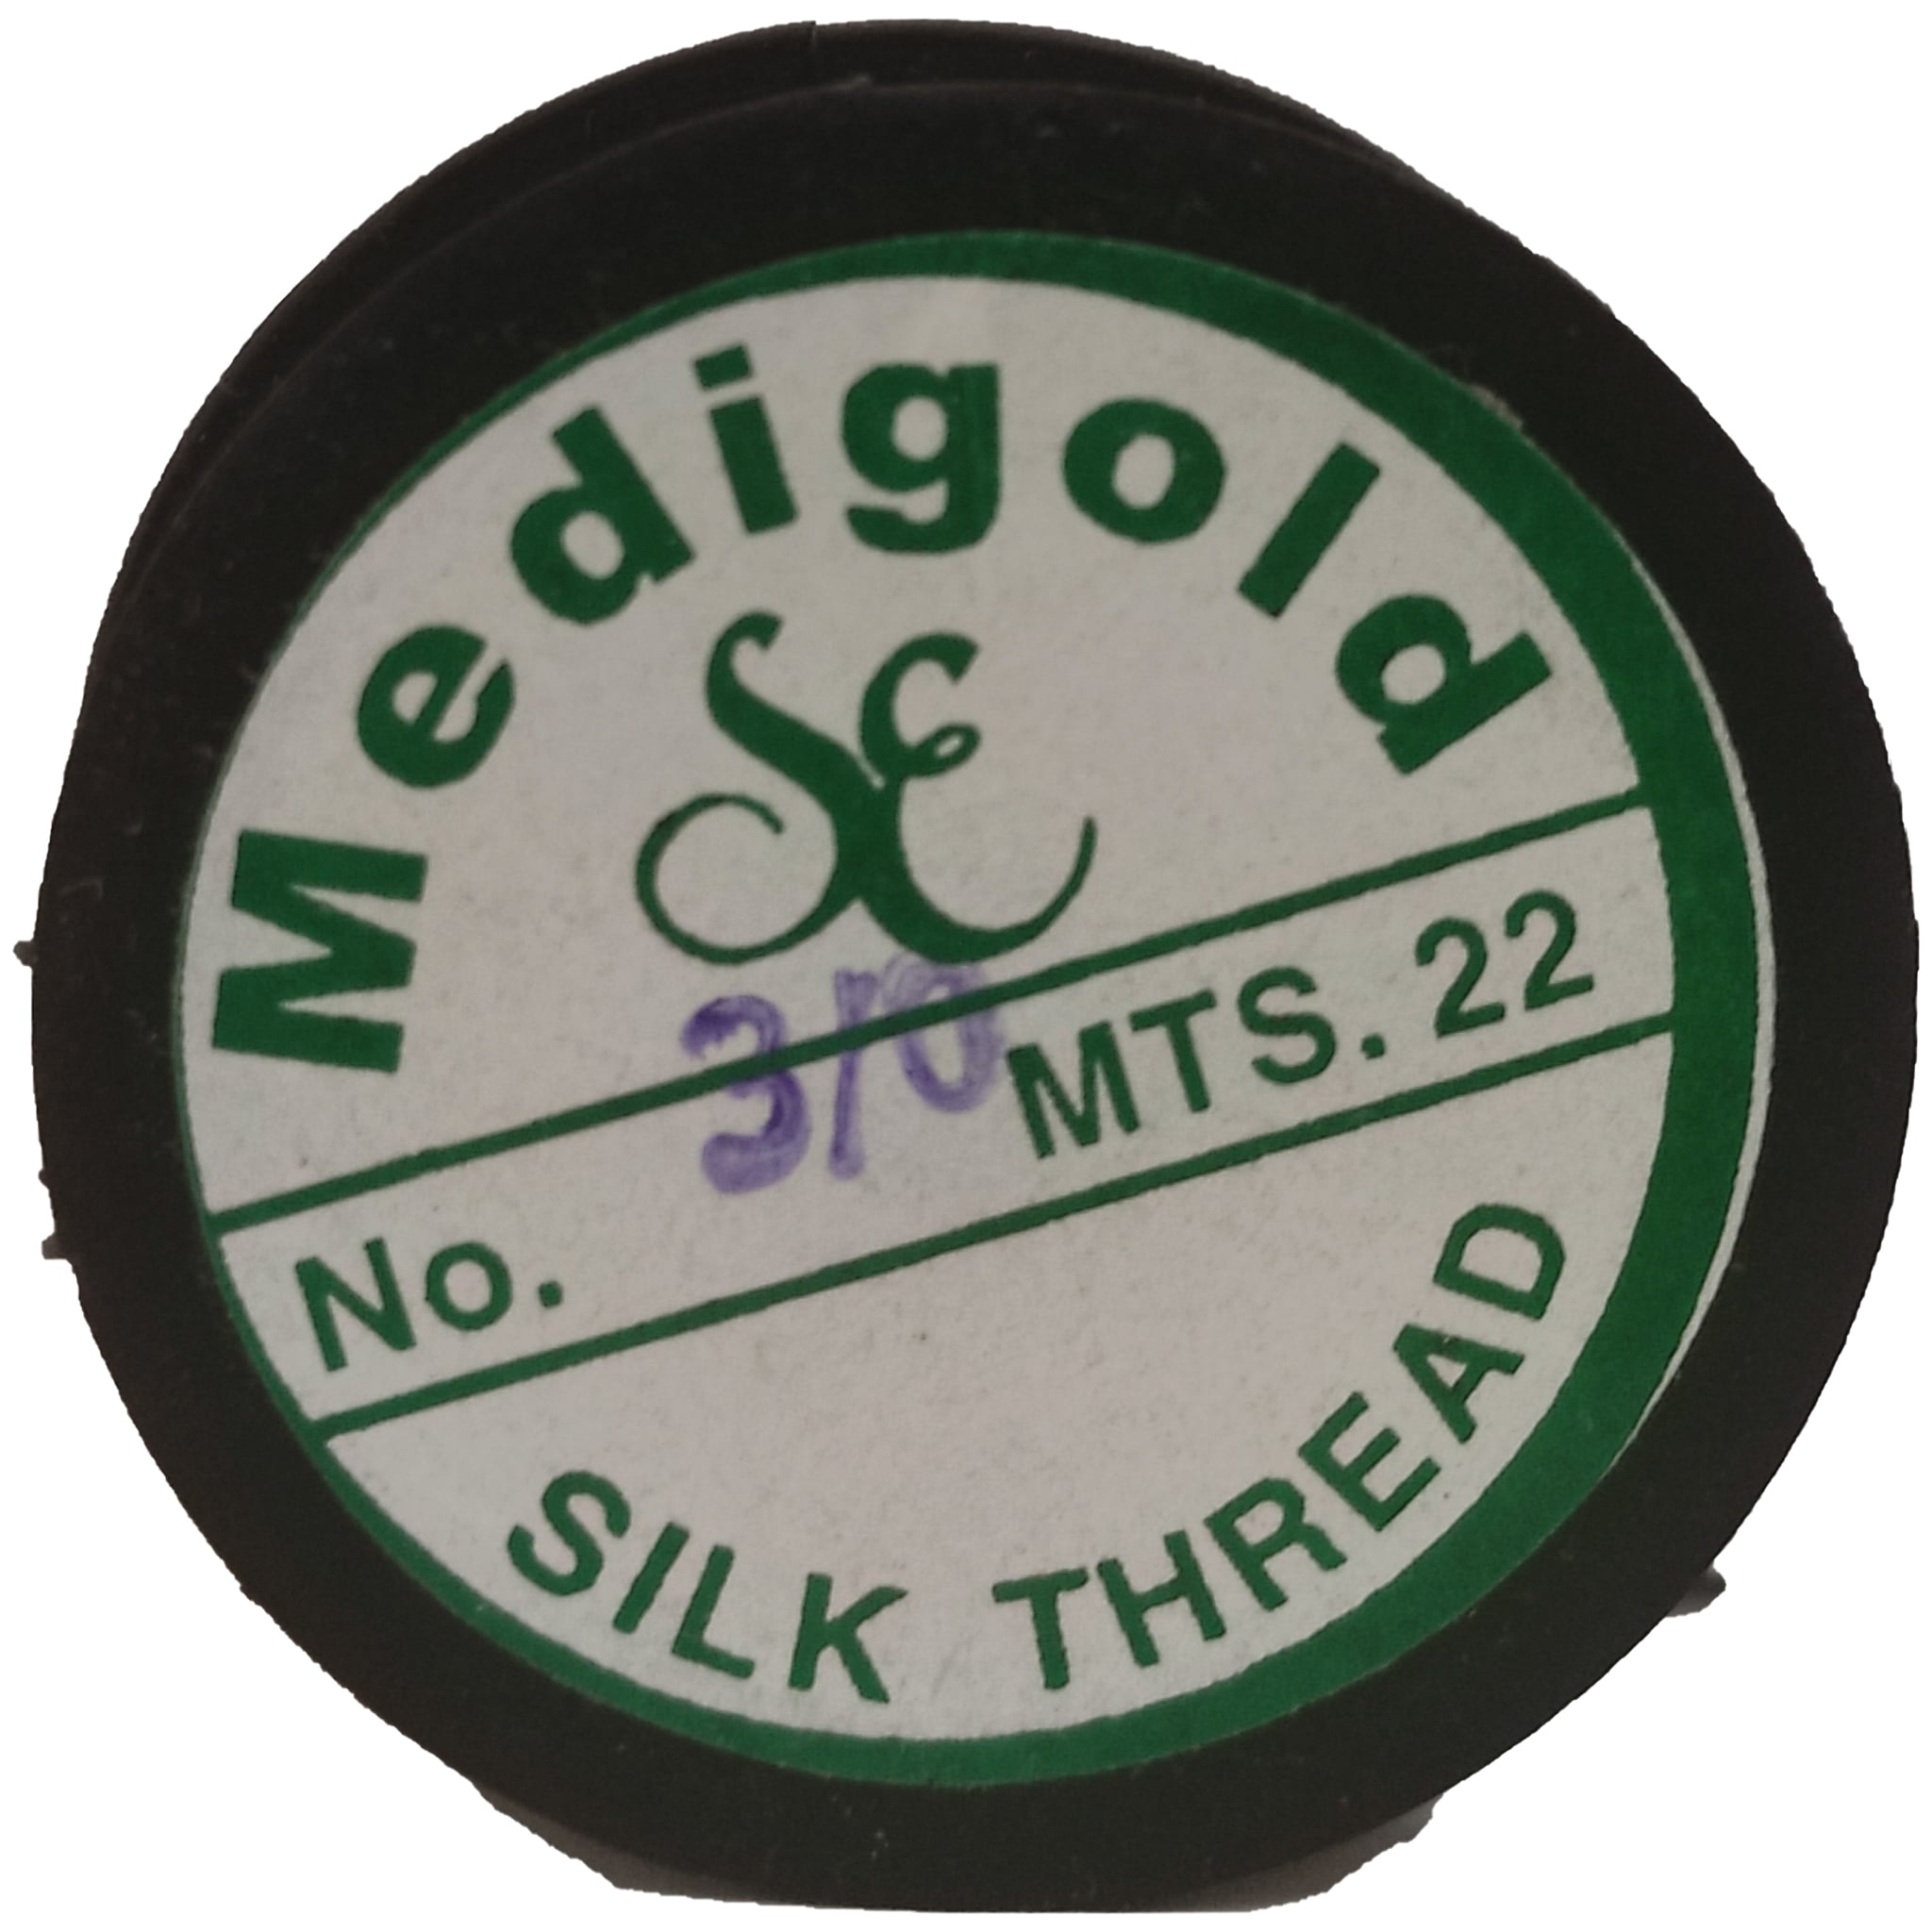 Medigold Silk Thread MTS. 22